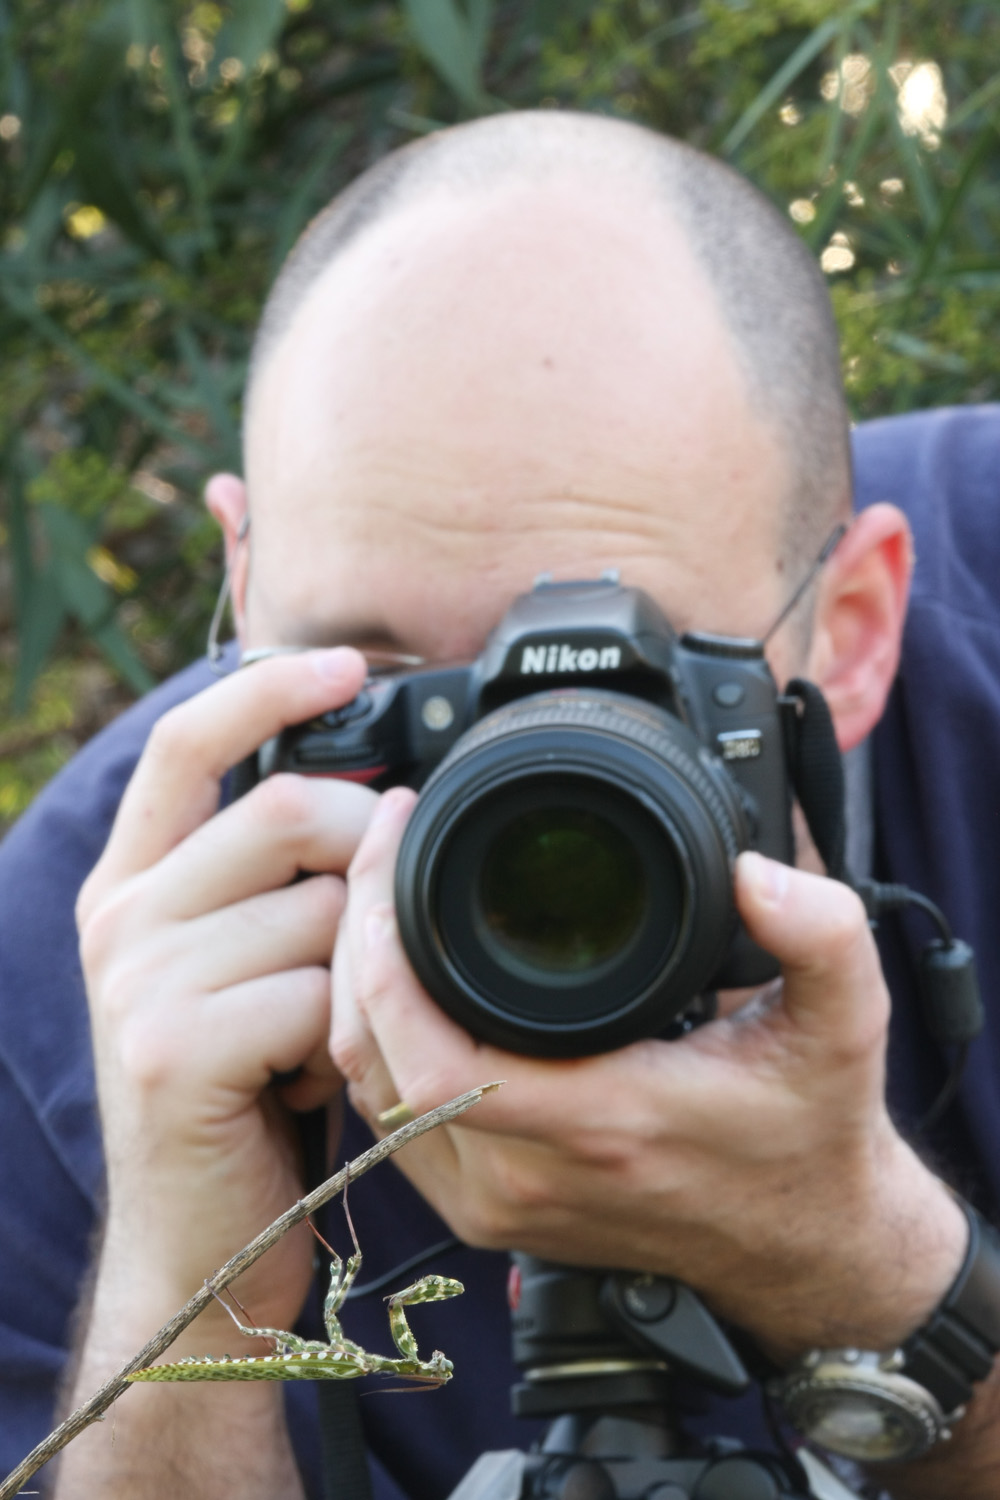 Photographer Gilad Mass shoots a praying mantis up close and personal